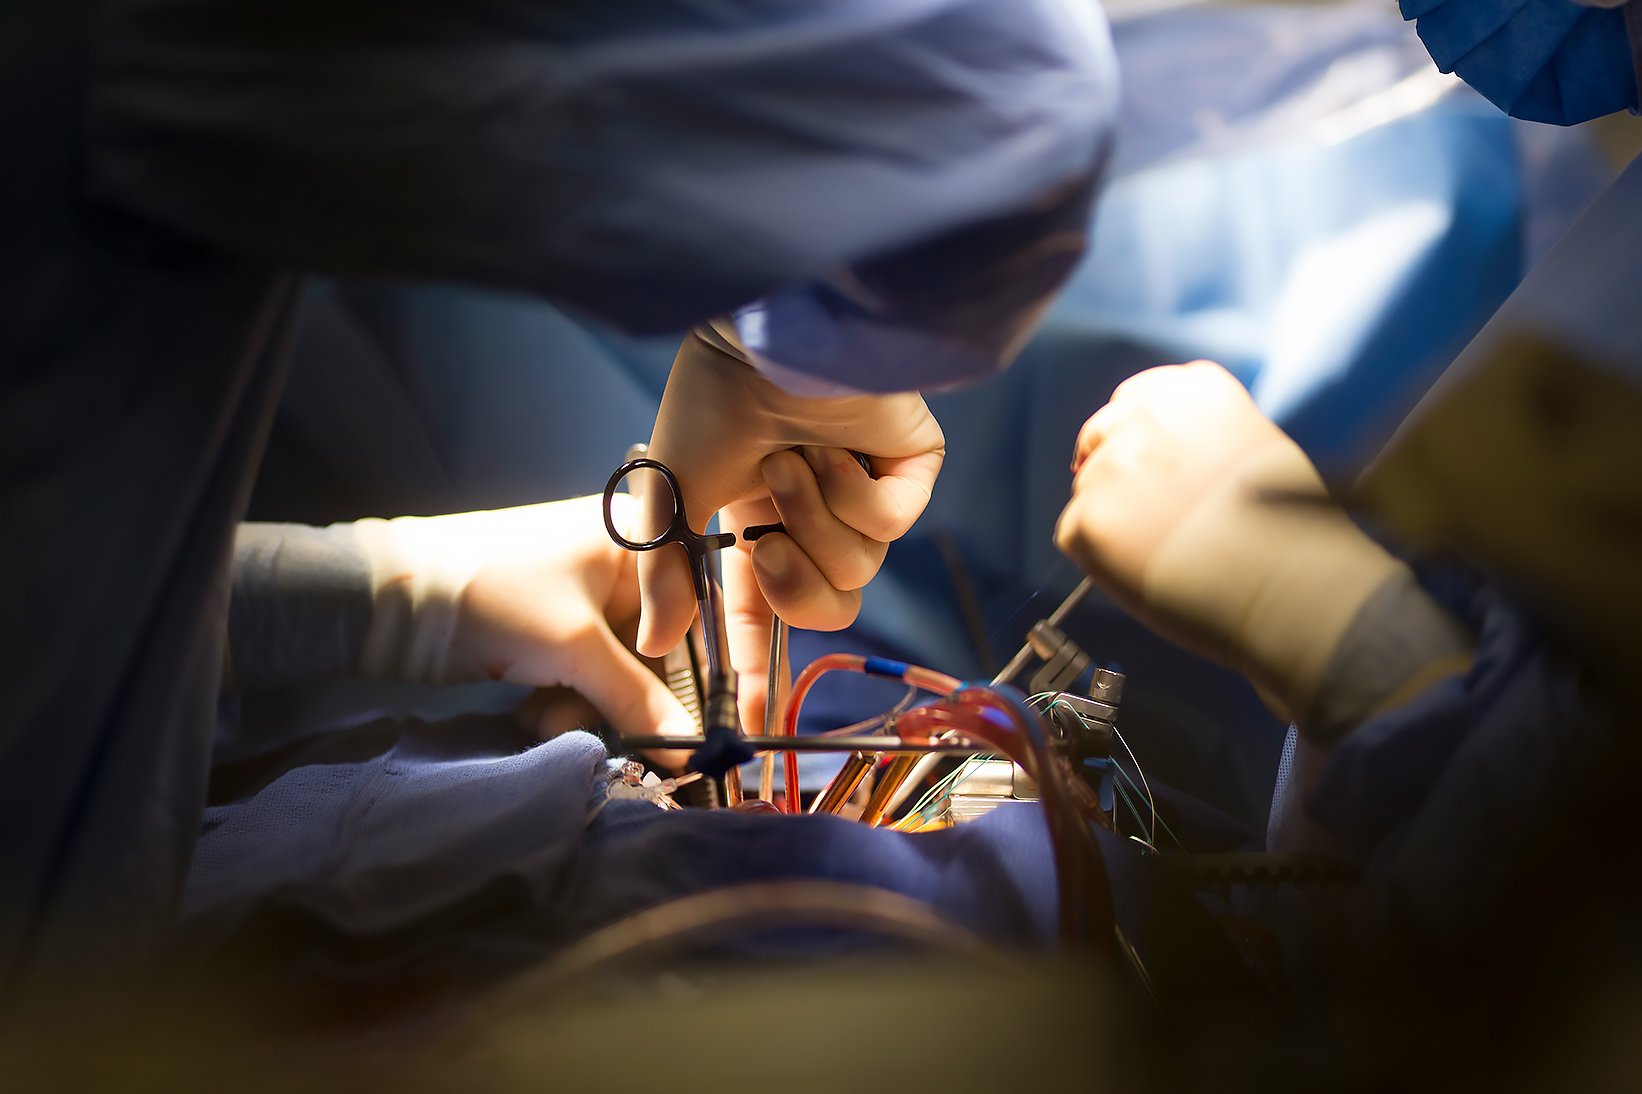 Mitral valve repair operation at The Mount Sinai Hospital